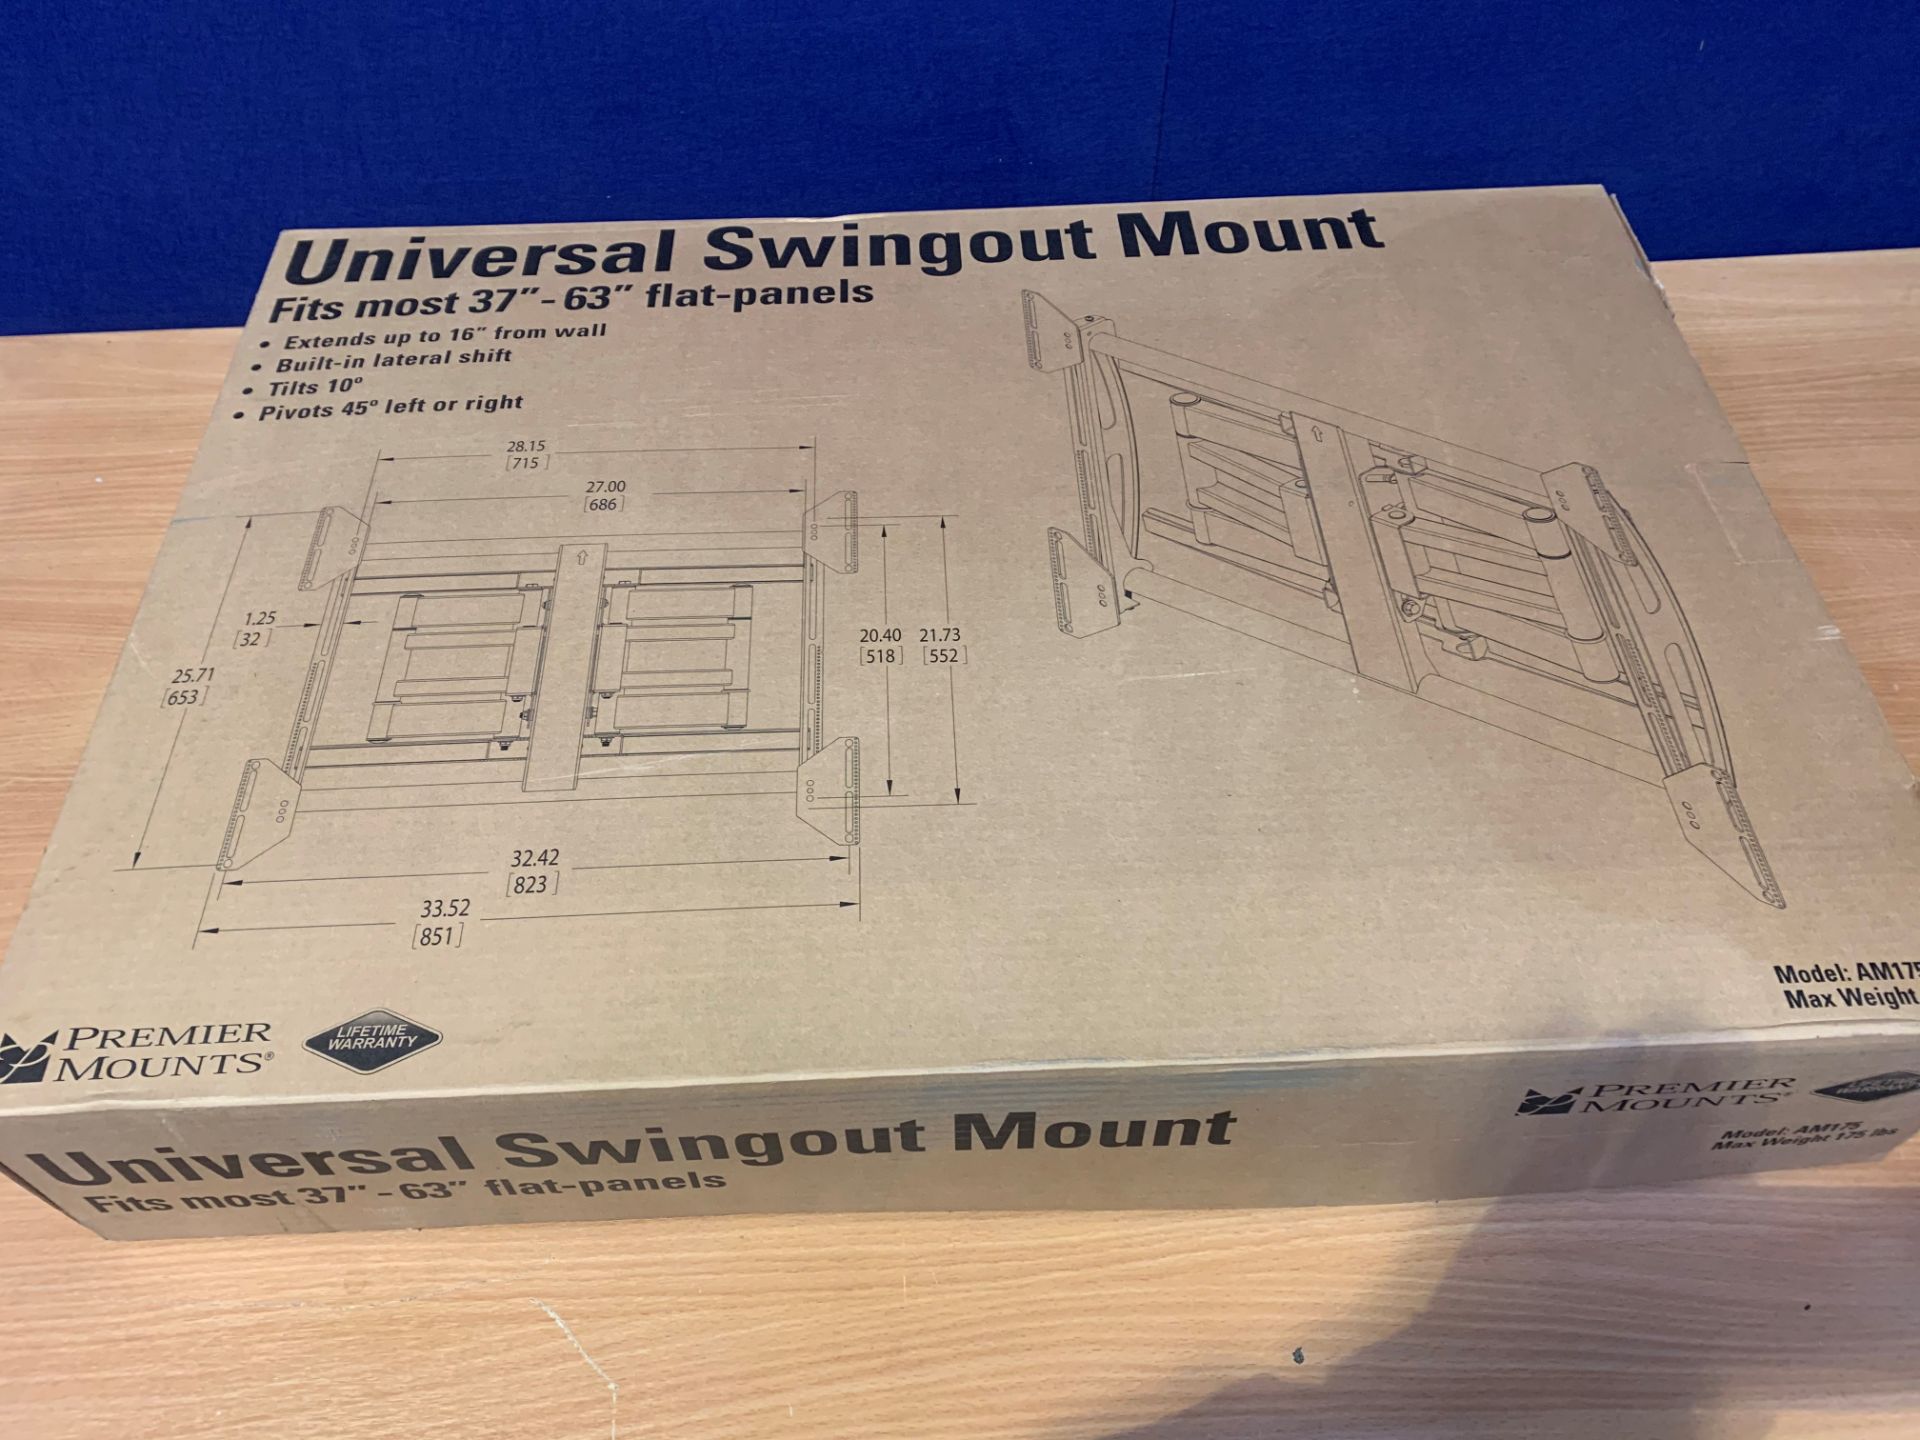 Premier Mounts - Universal Swing Out Mount AM 175